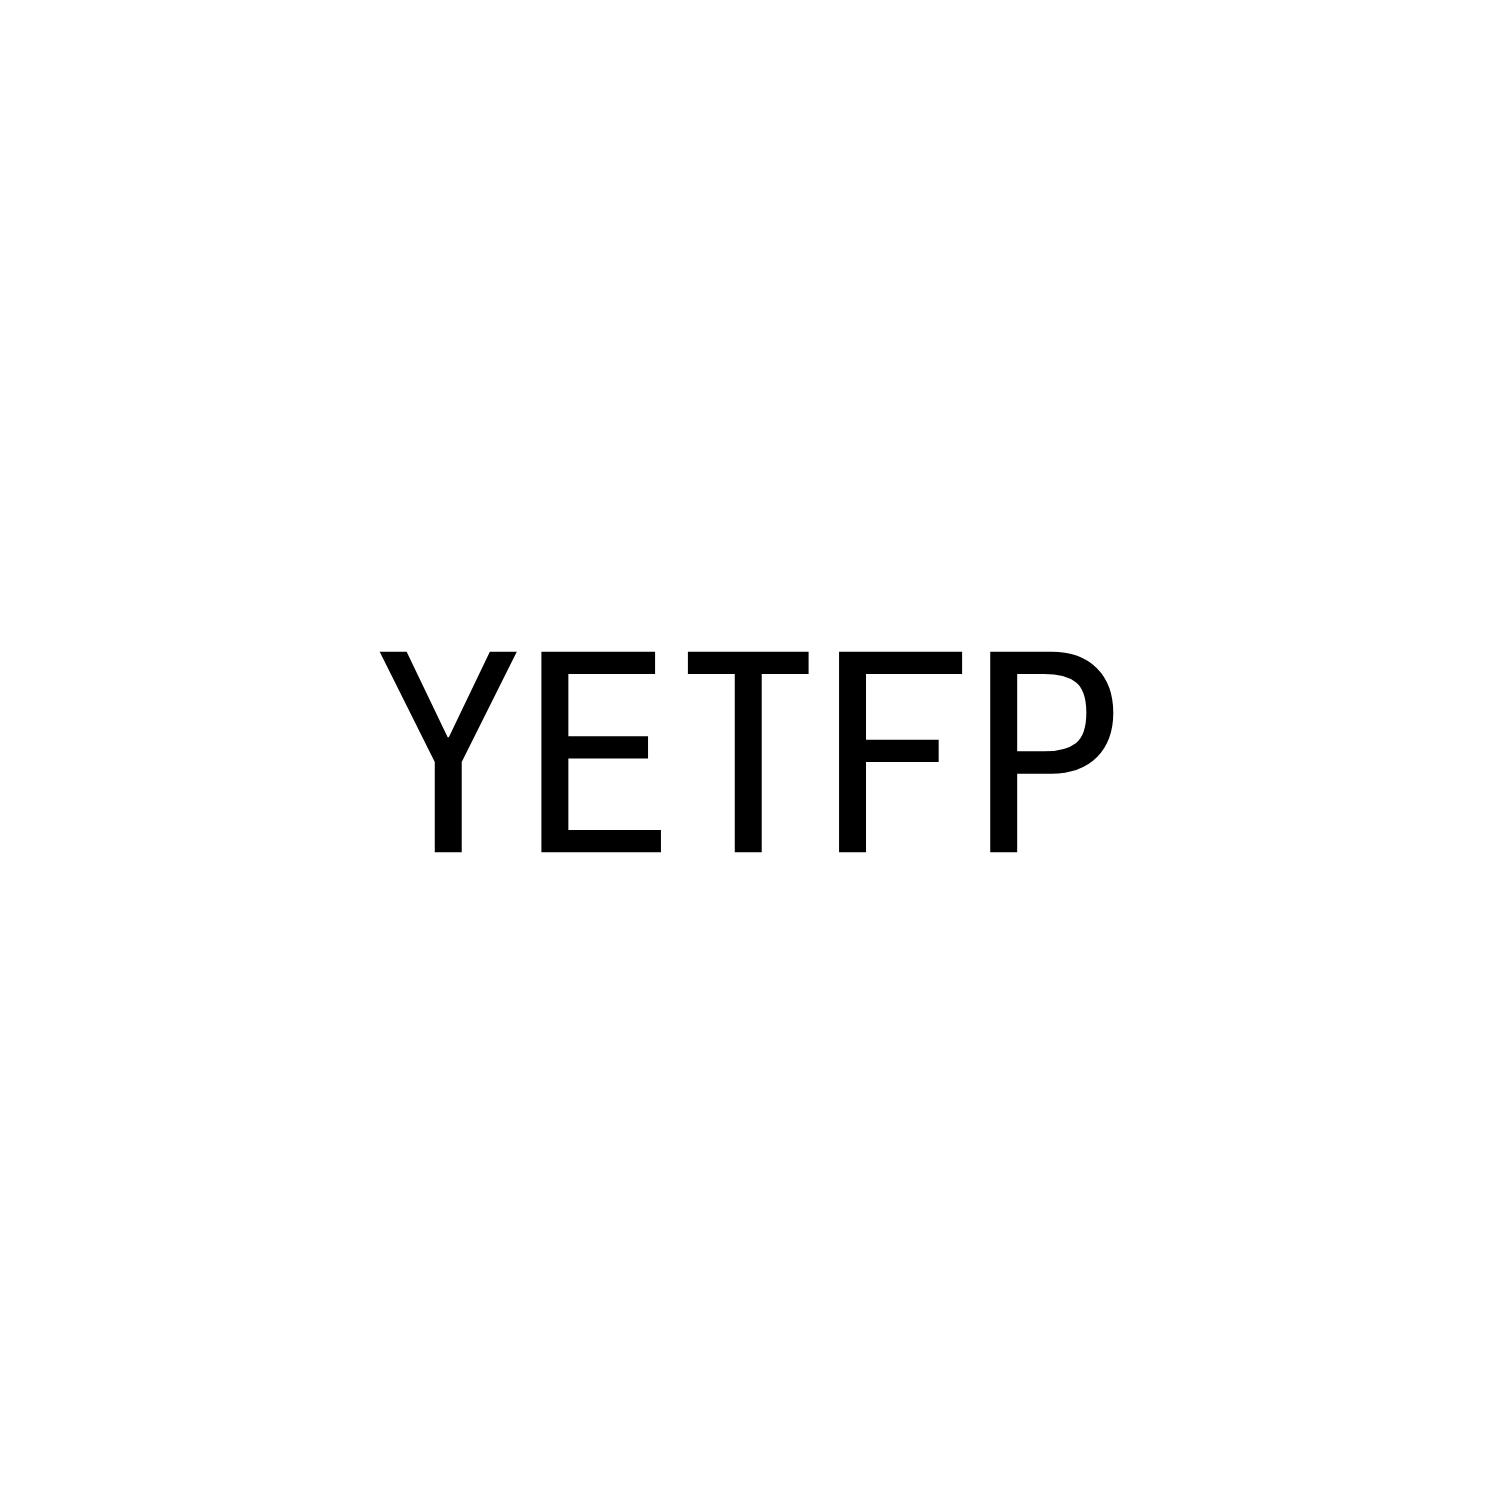 YETFP